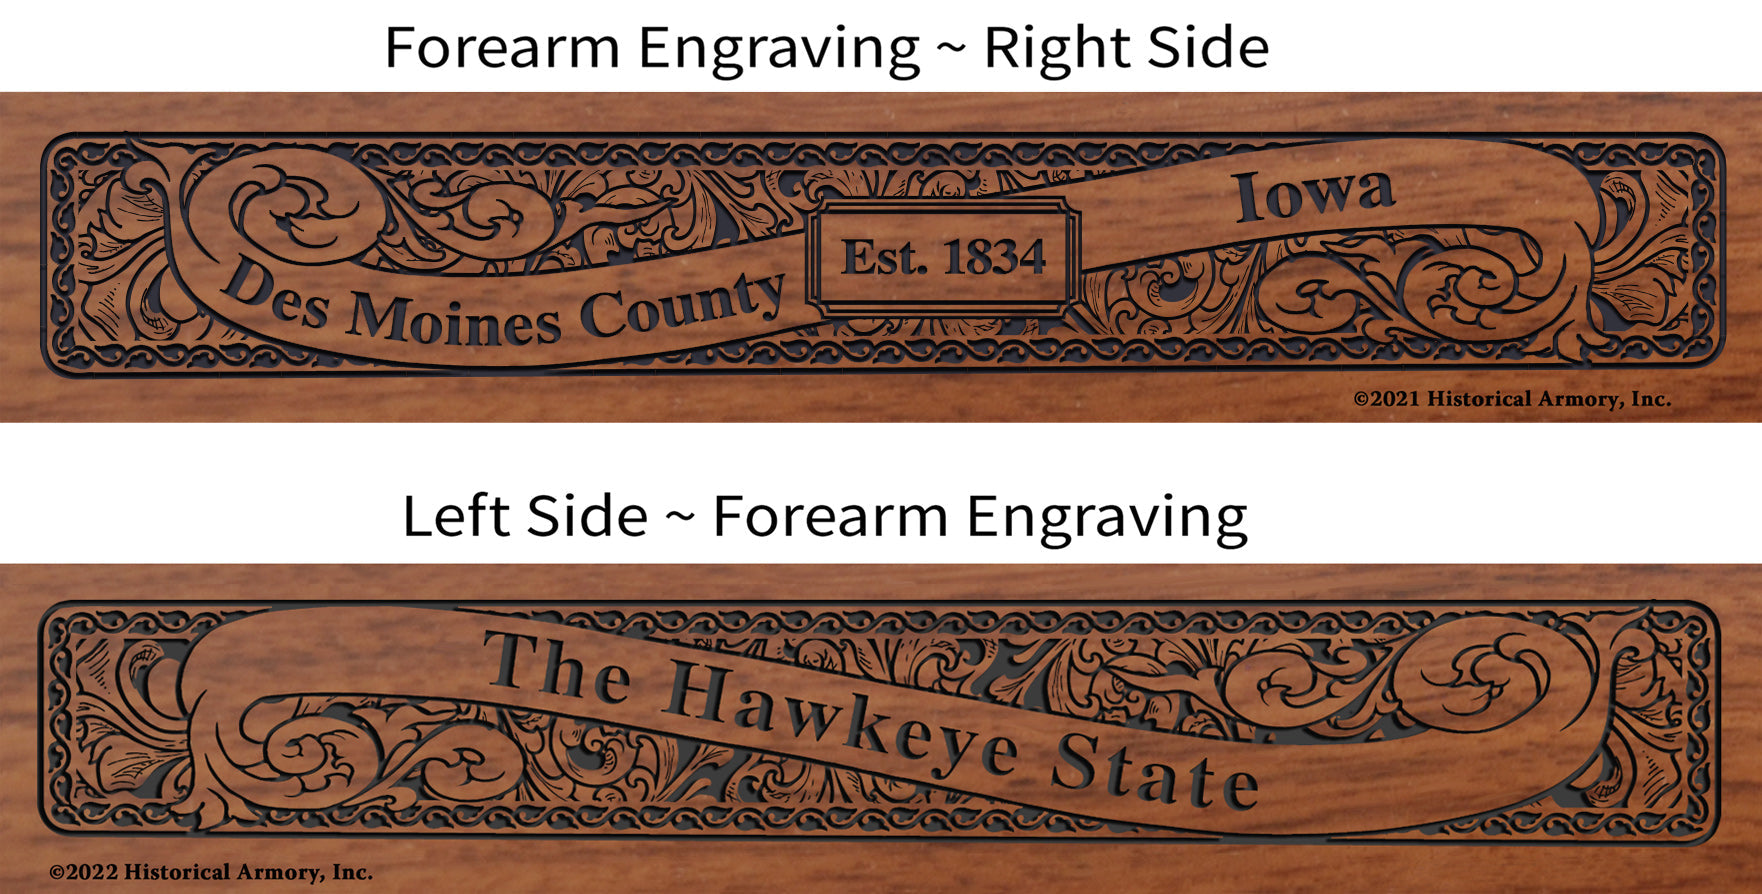 Des Moines County Iowa Engraved Rifle Forearm